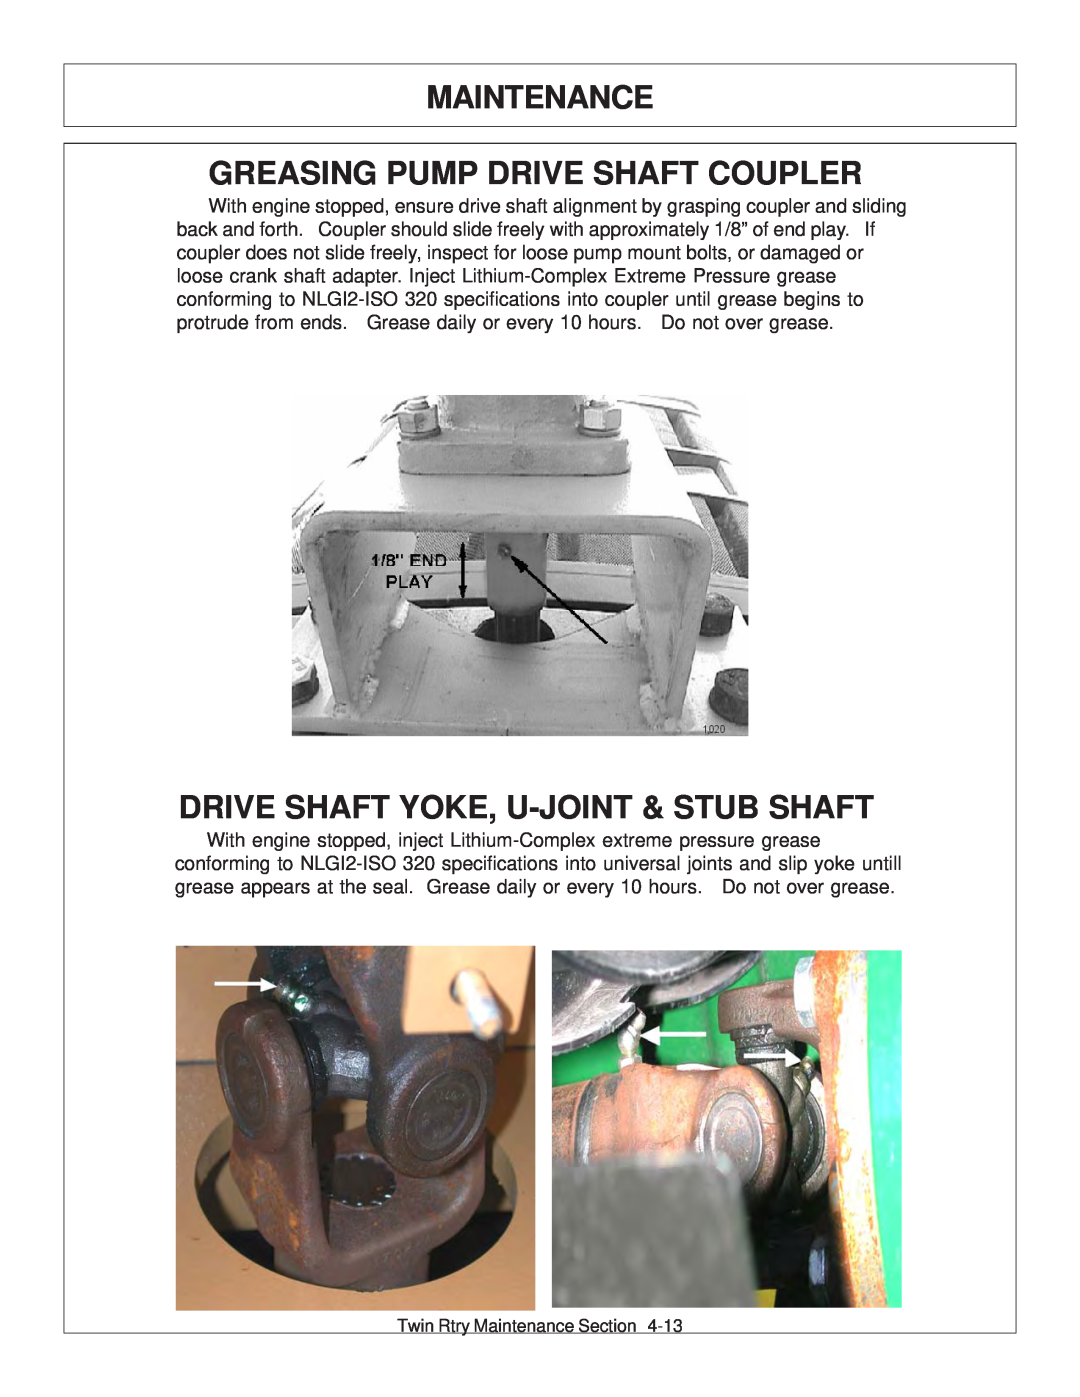 Tiger Products Co., Ltd 6020009 Maintenance Greasing Pump Drive Shaft Coupler, Drive Shaft Yoke, U-Joint & Stub Shaft 